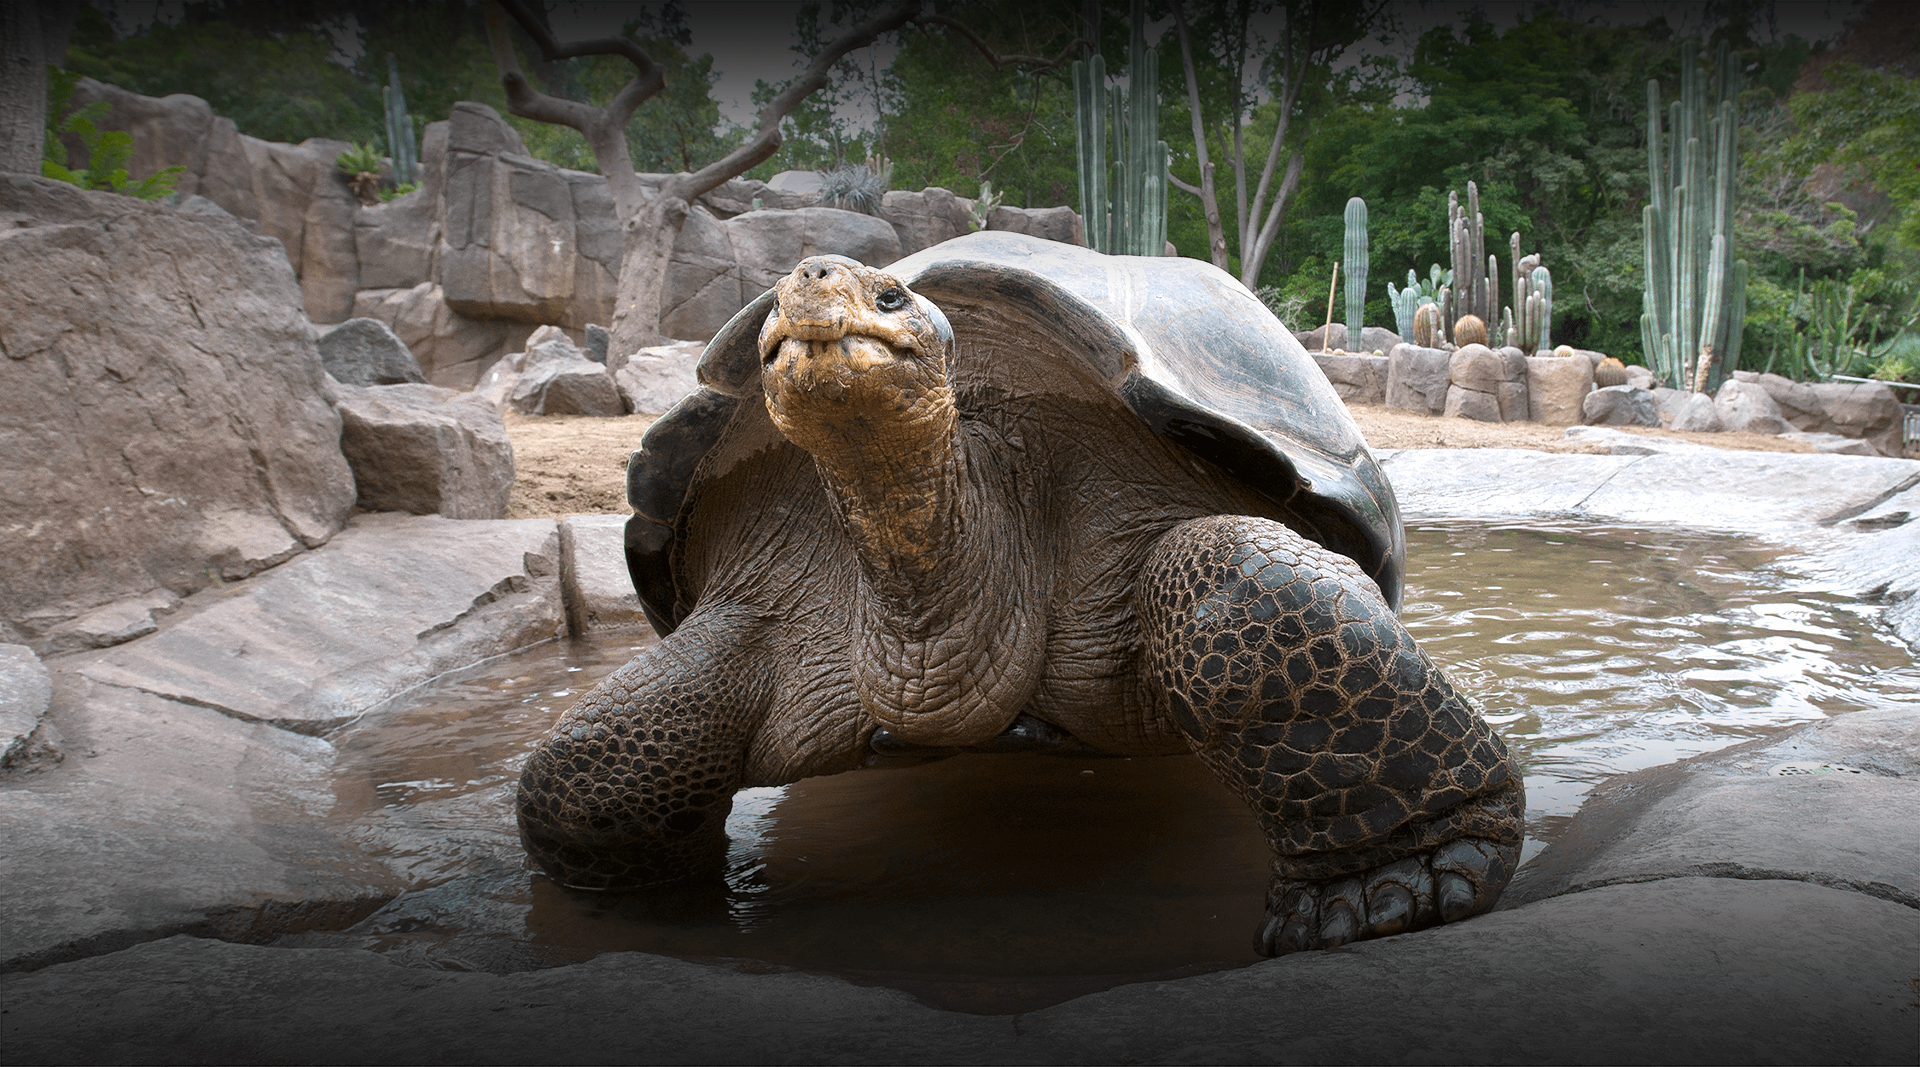 Galapagos tortoise walks twoards camera. 